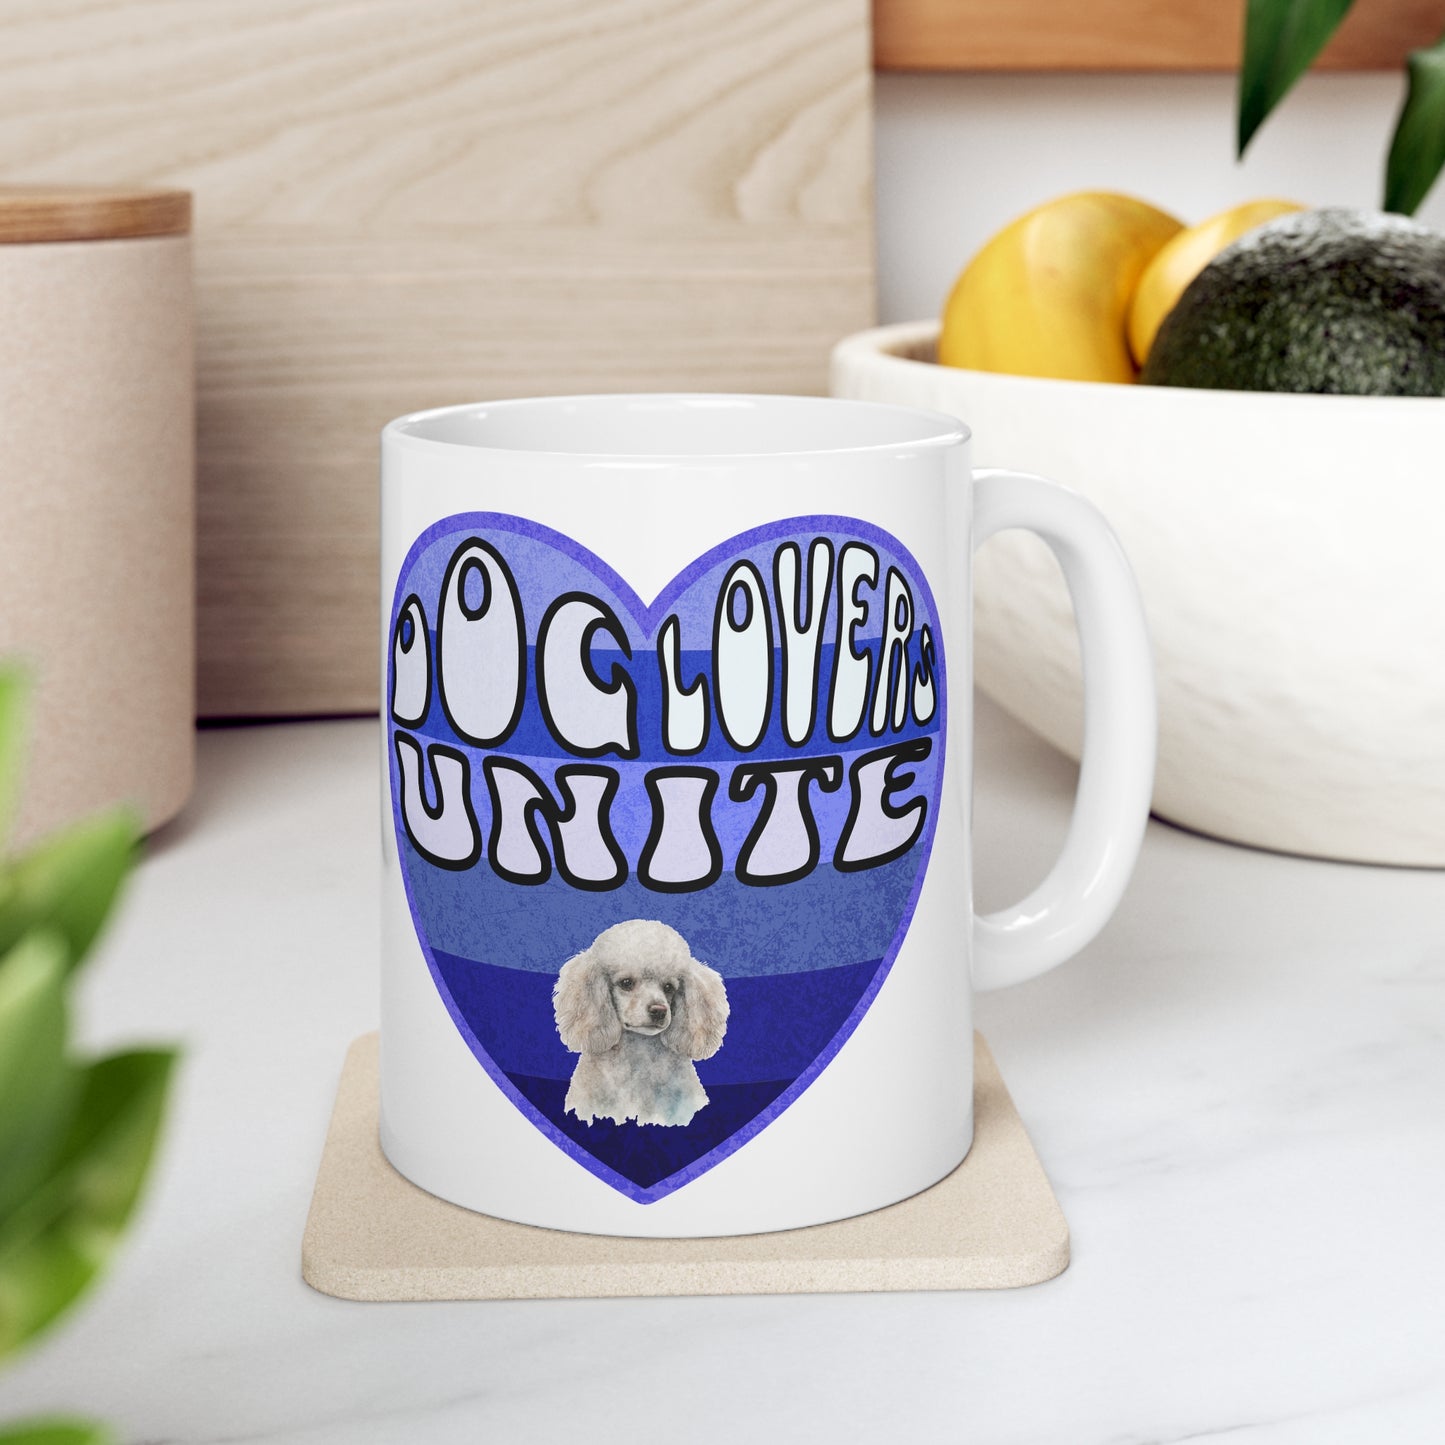 Dog Lovers Unite - Ceramic Mug 11oz